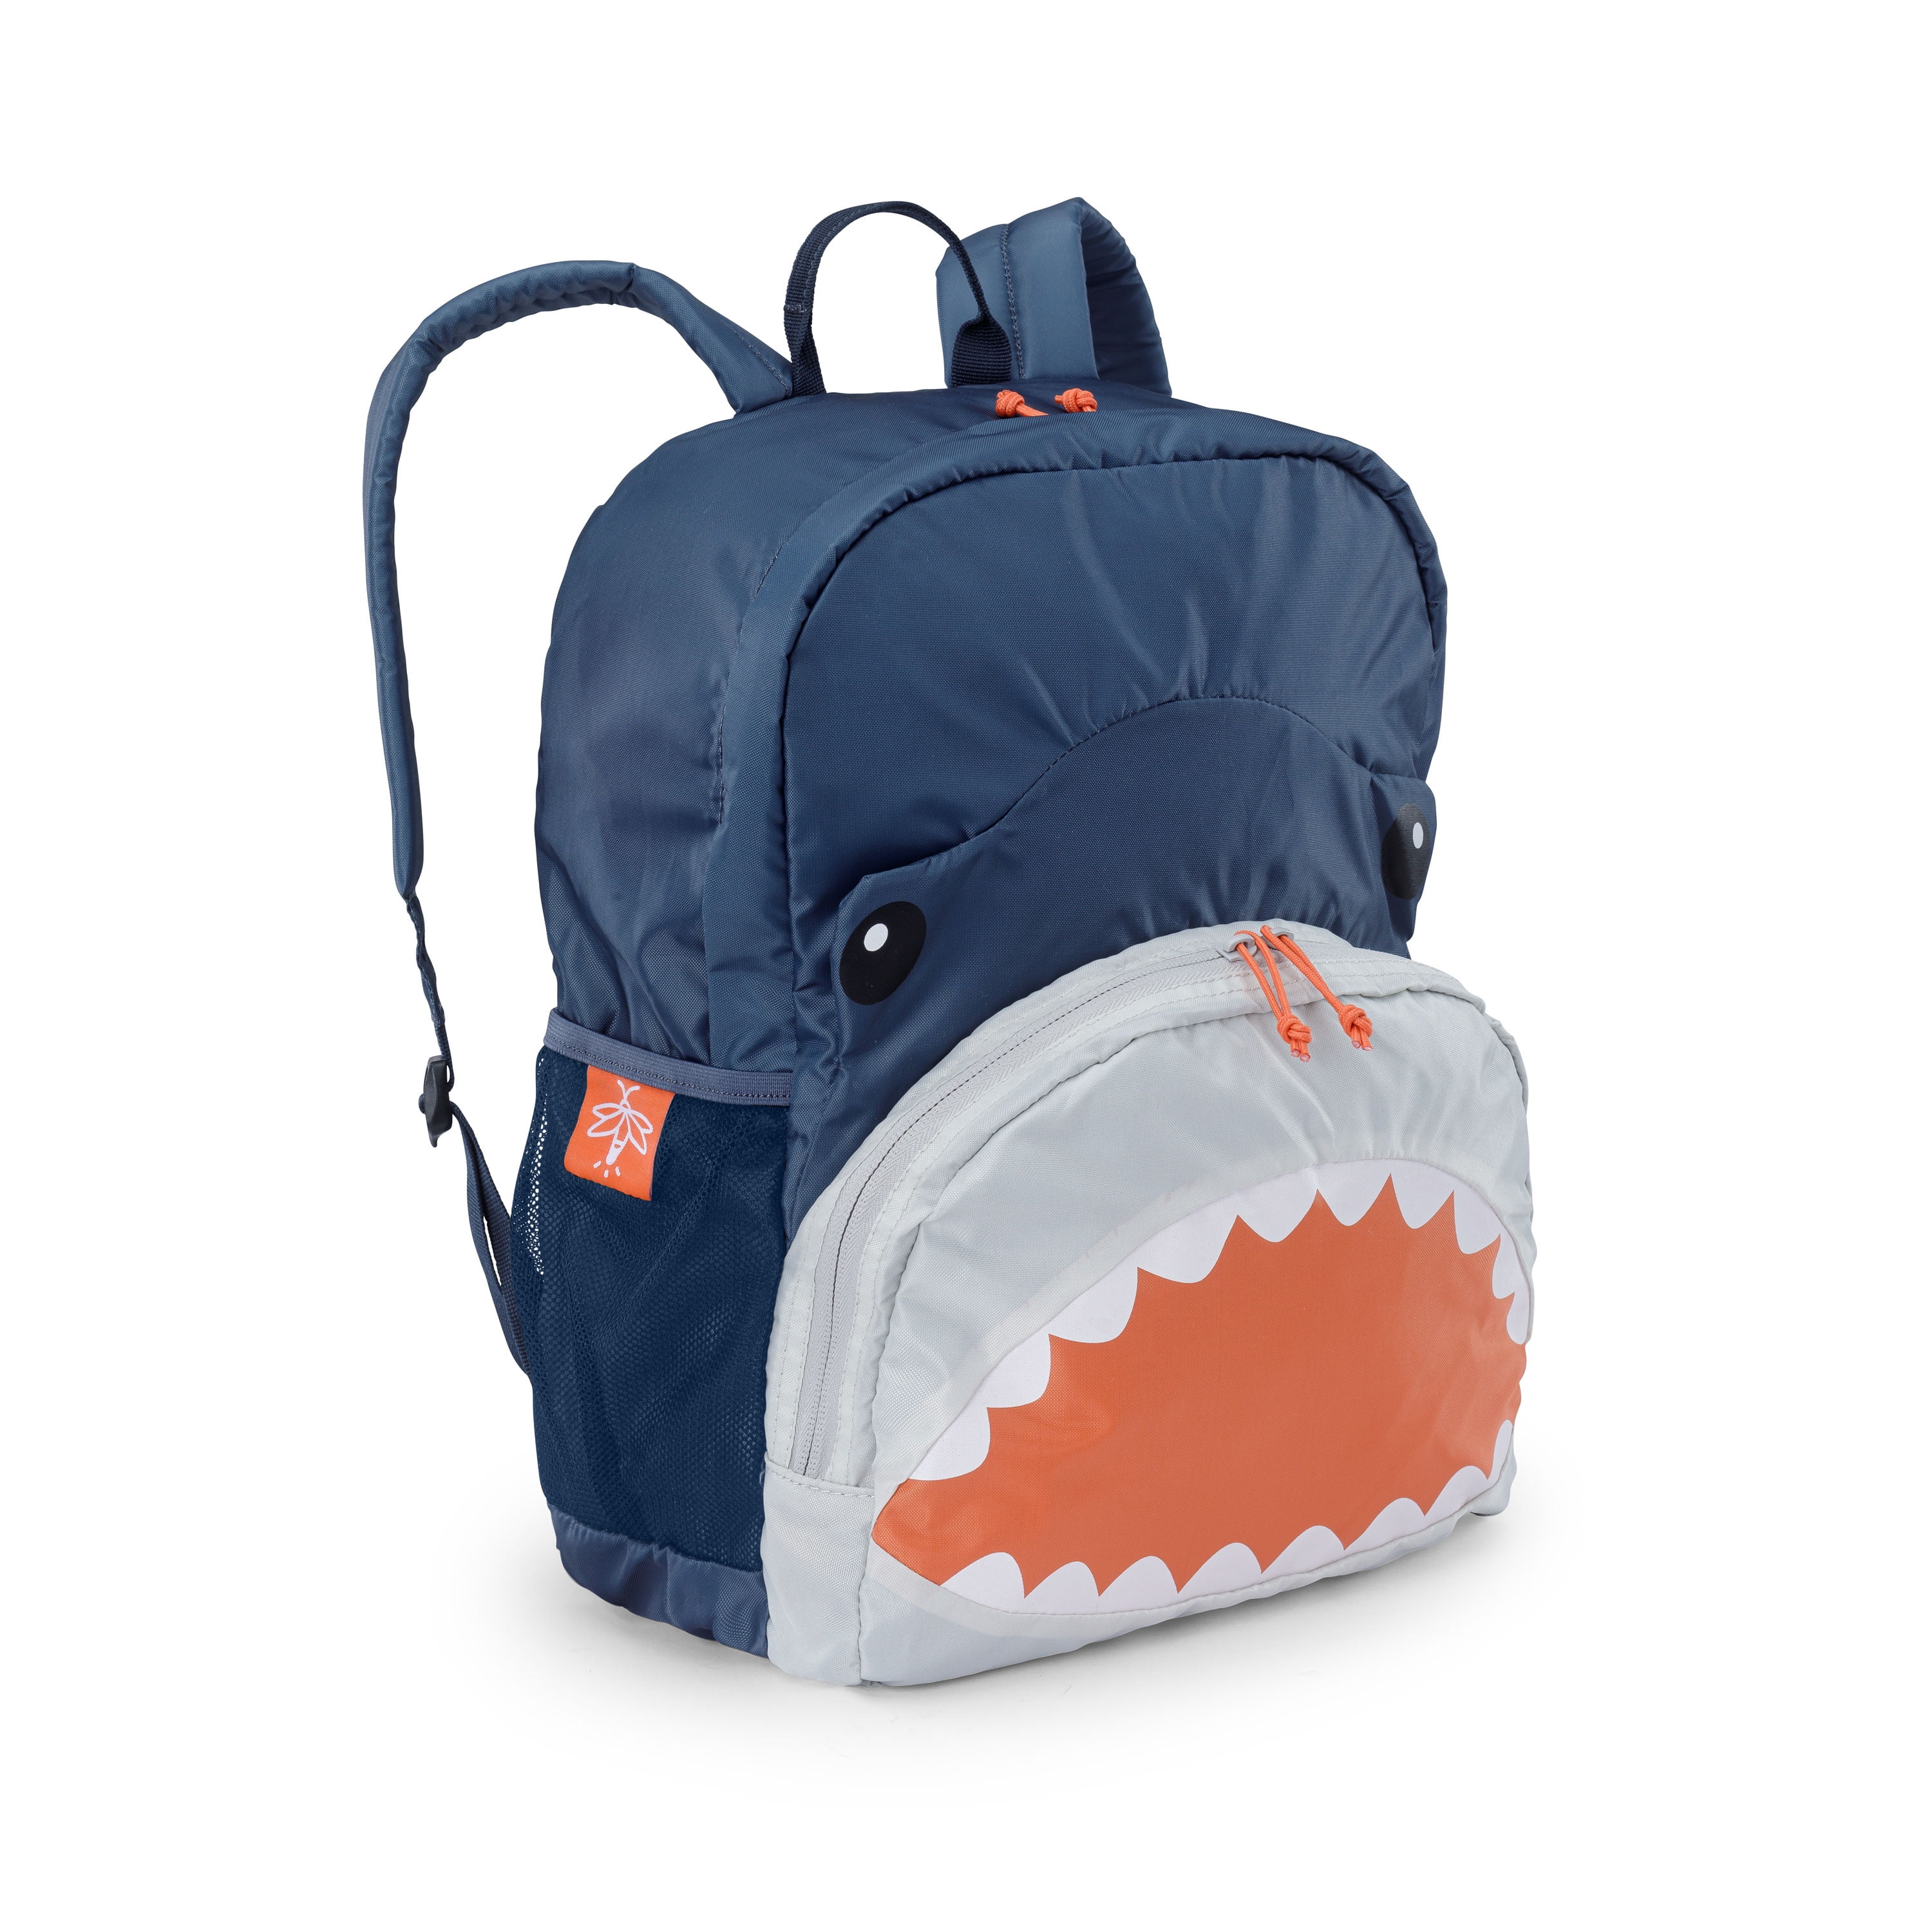 Firefly! Outdoor Gear Finn The Shark Kid's Backpack - Navy Blue (15 liter), Unisex, Size: 15L